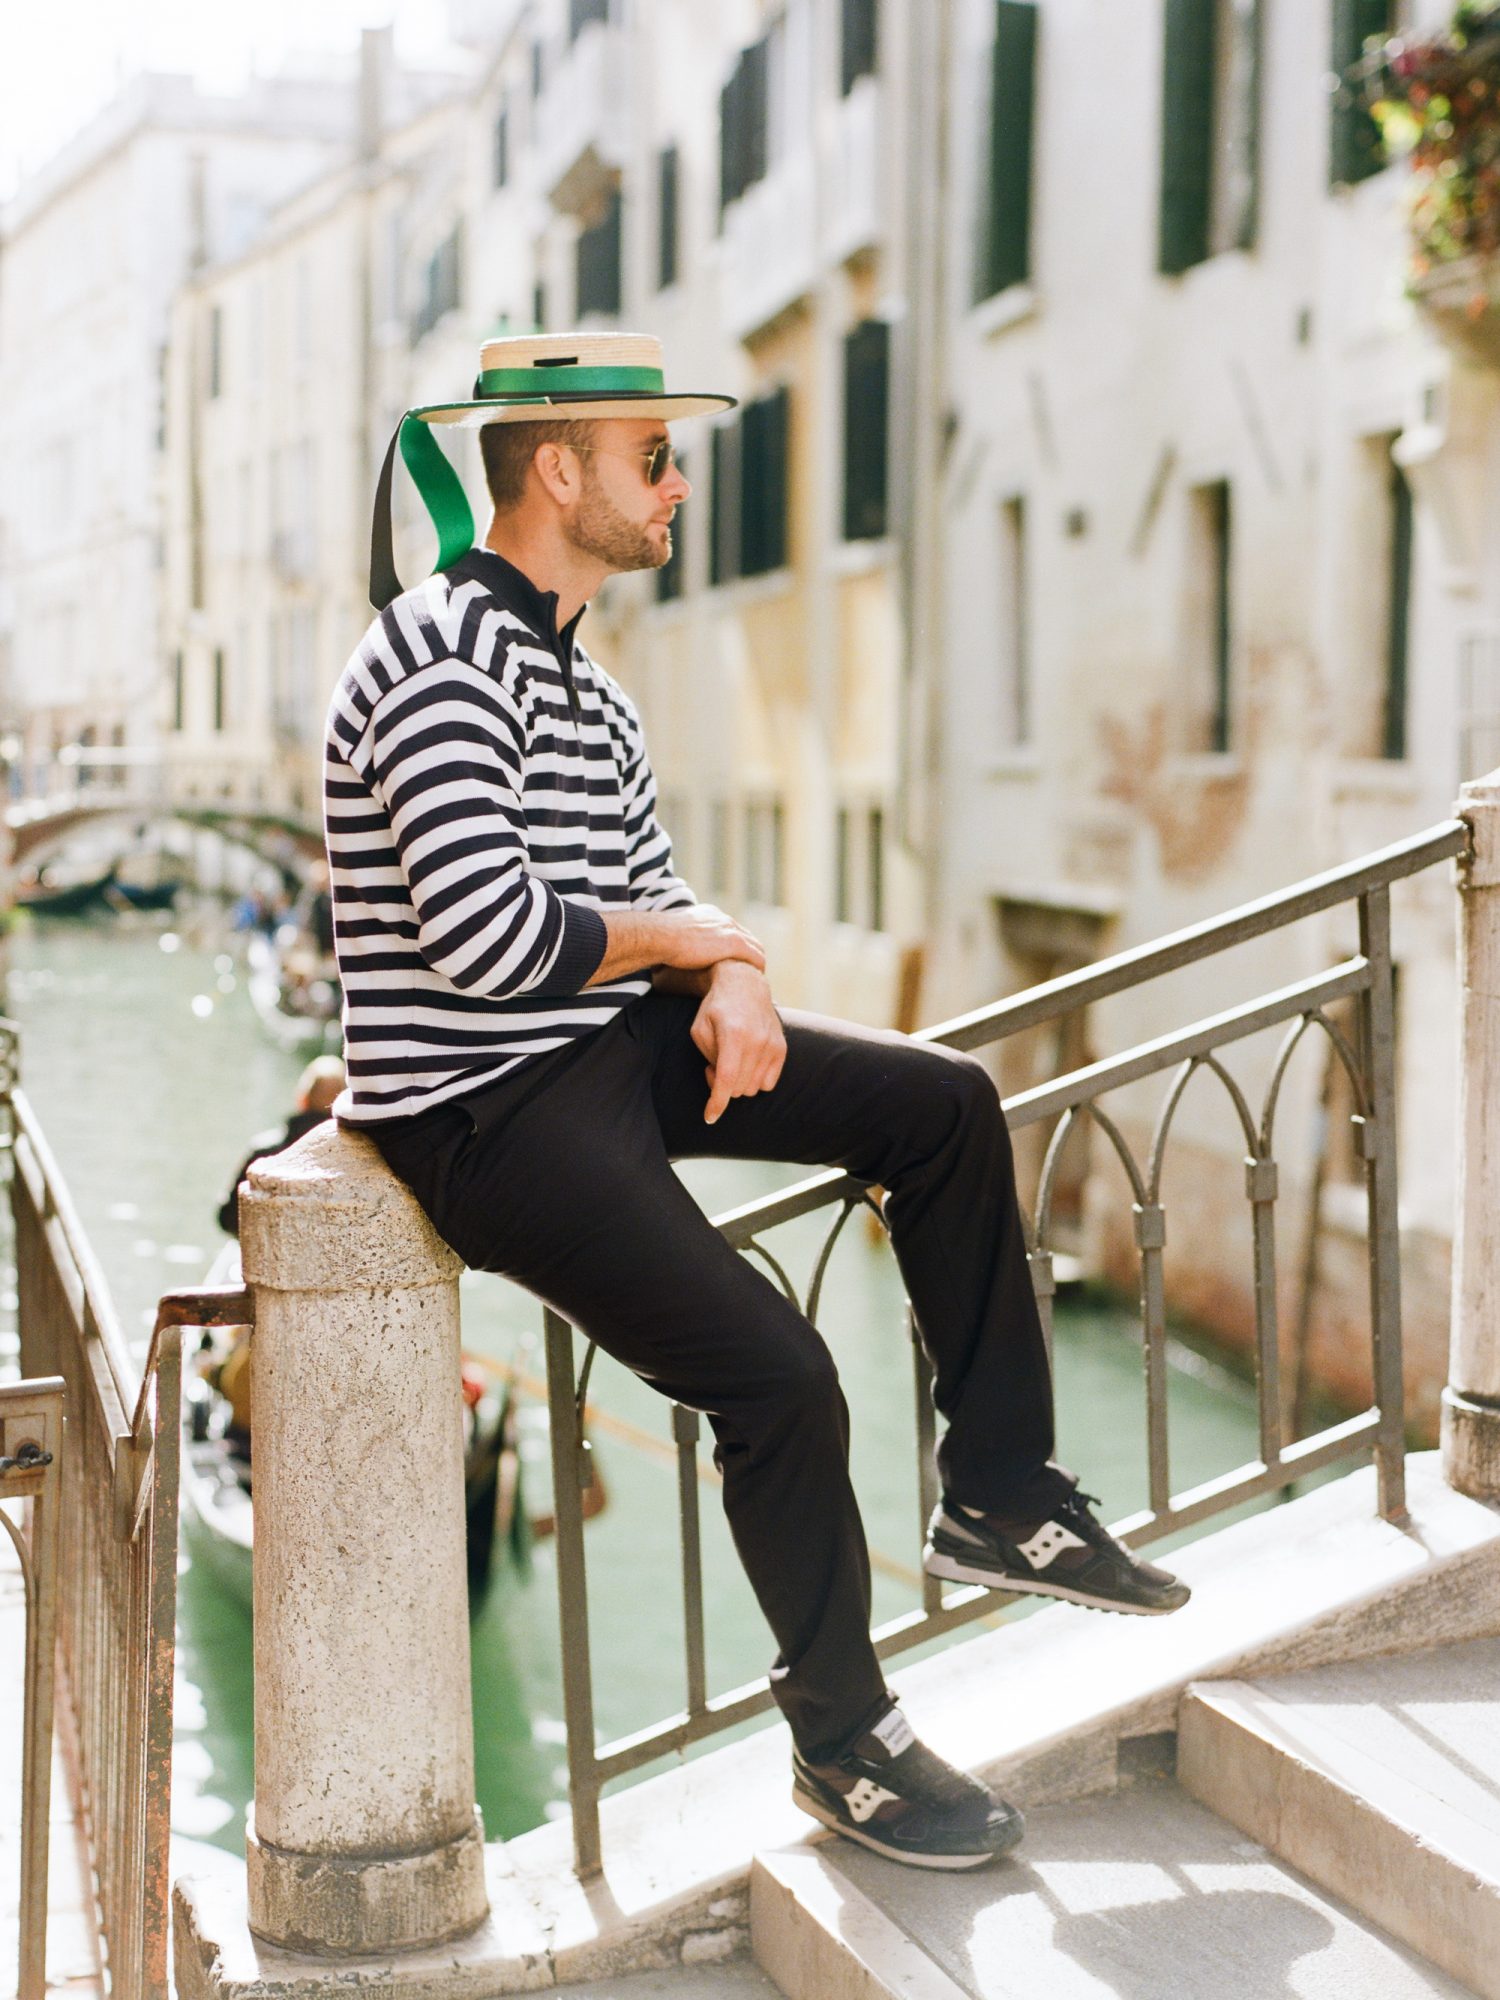 Gondolier in Venice. Photo by Rachel Havel